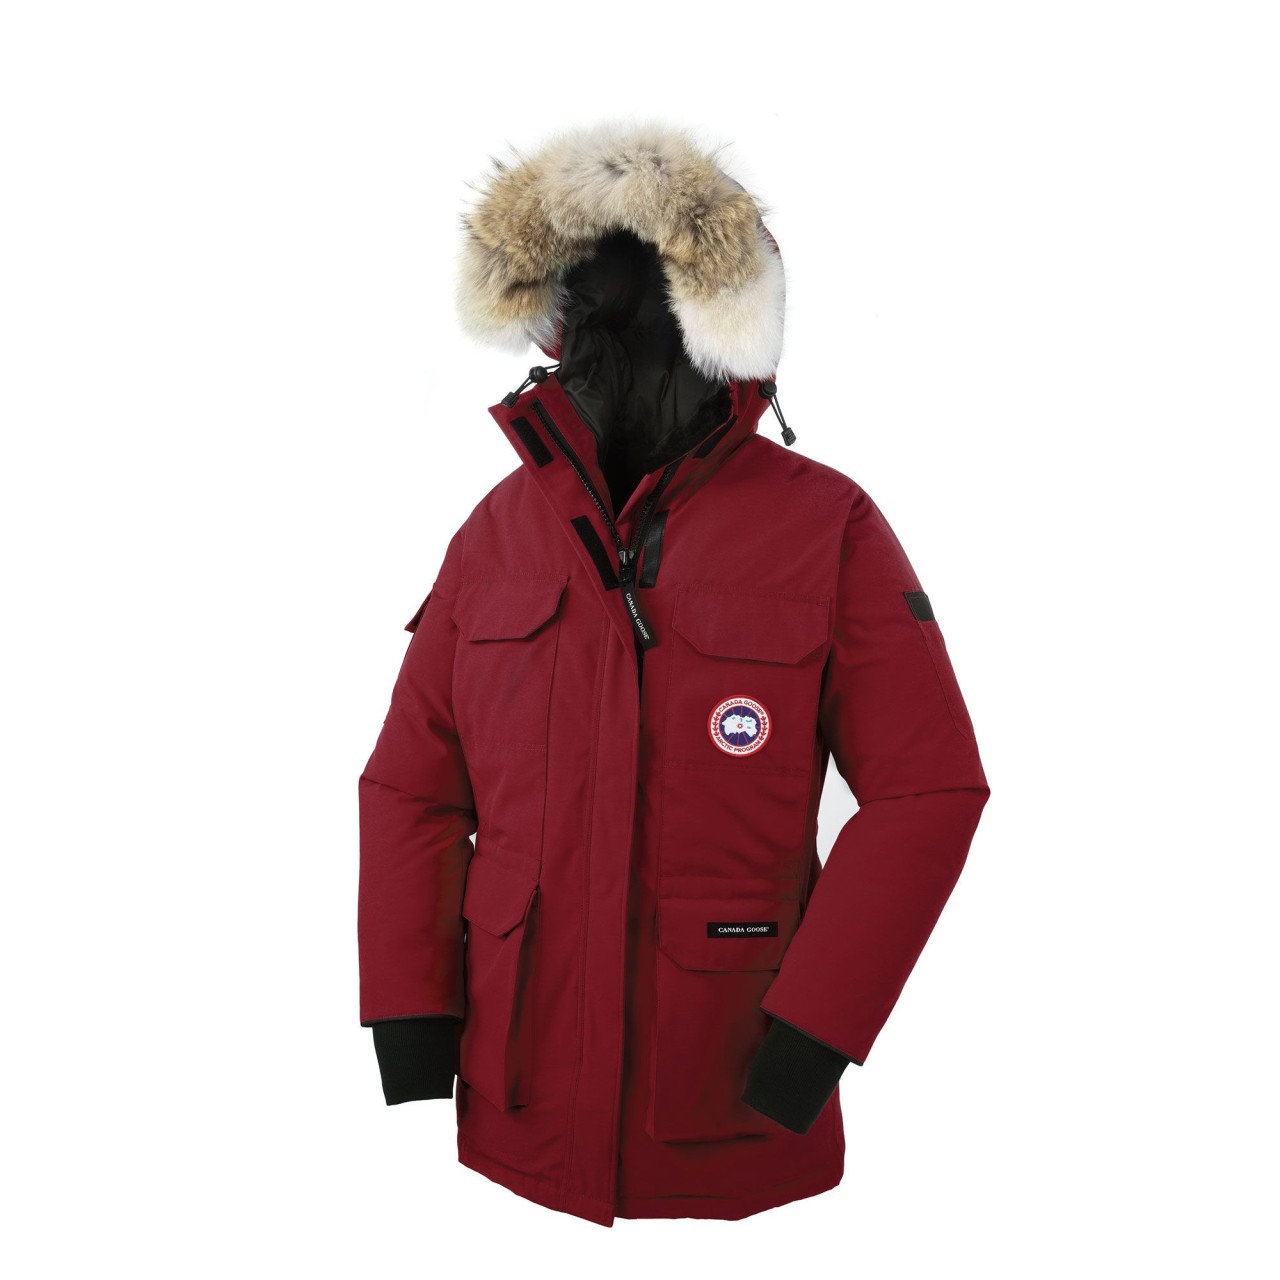 Canada Goose langford parka outlet cheap - canada goose jacket sale | canada goose jackets outlet store